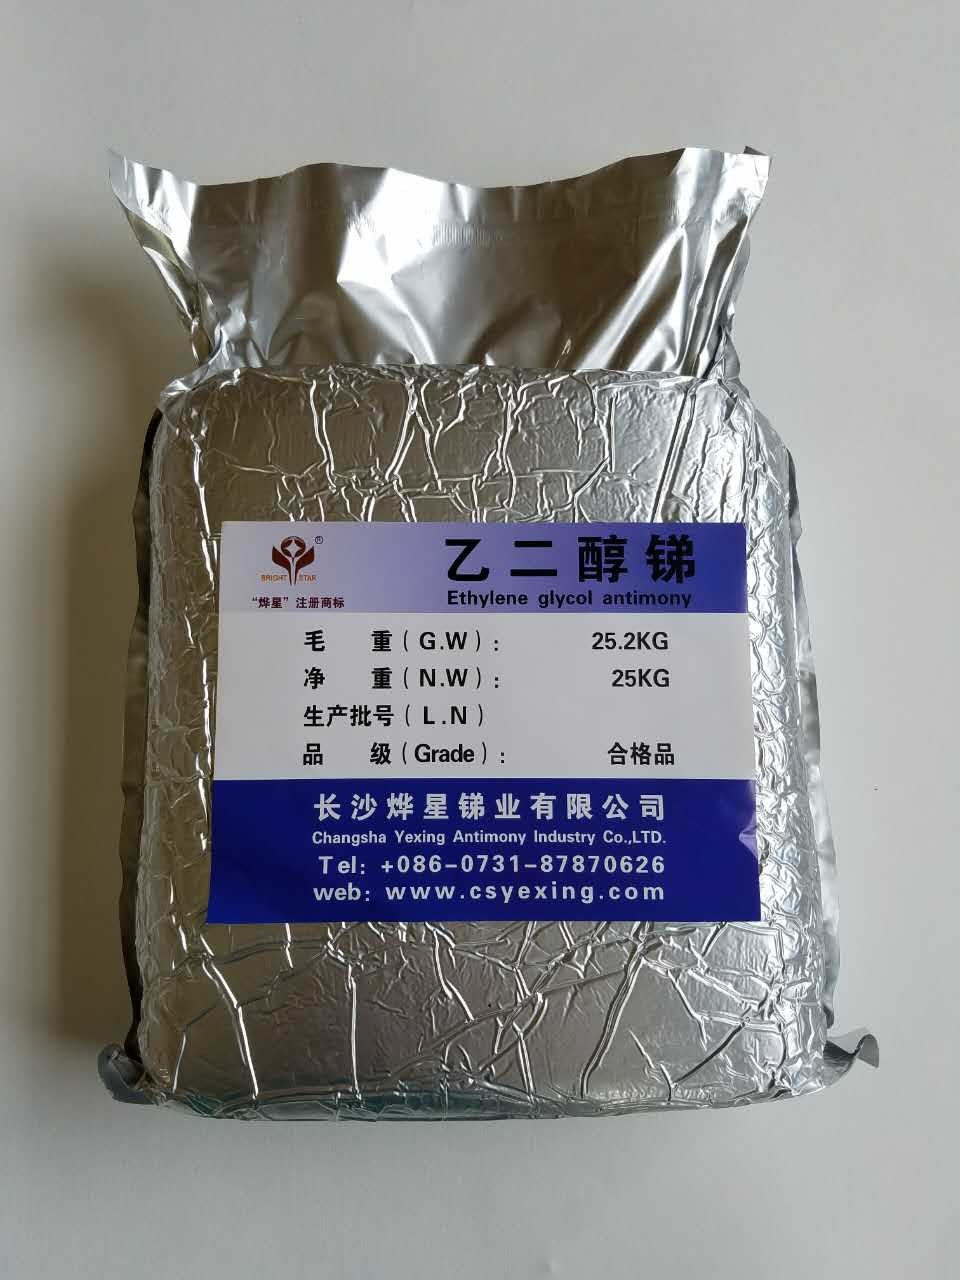 Best High Safety Antimony Tri Glycolate HS Code 3815900000 Ethylene Glycol Antimony wholesale